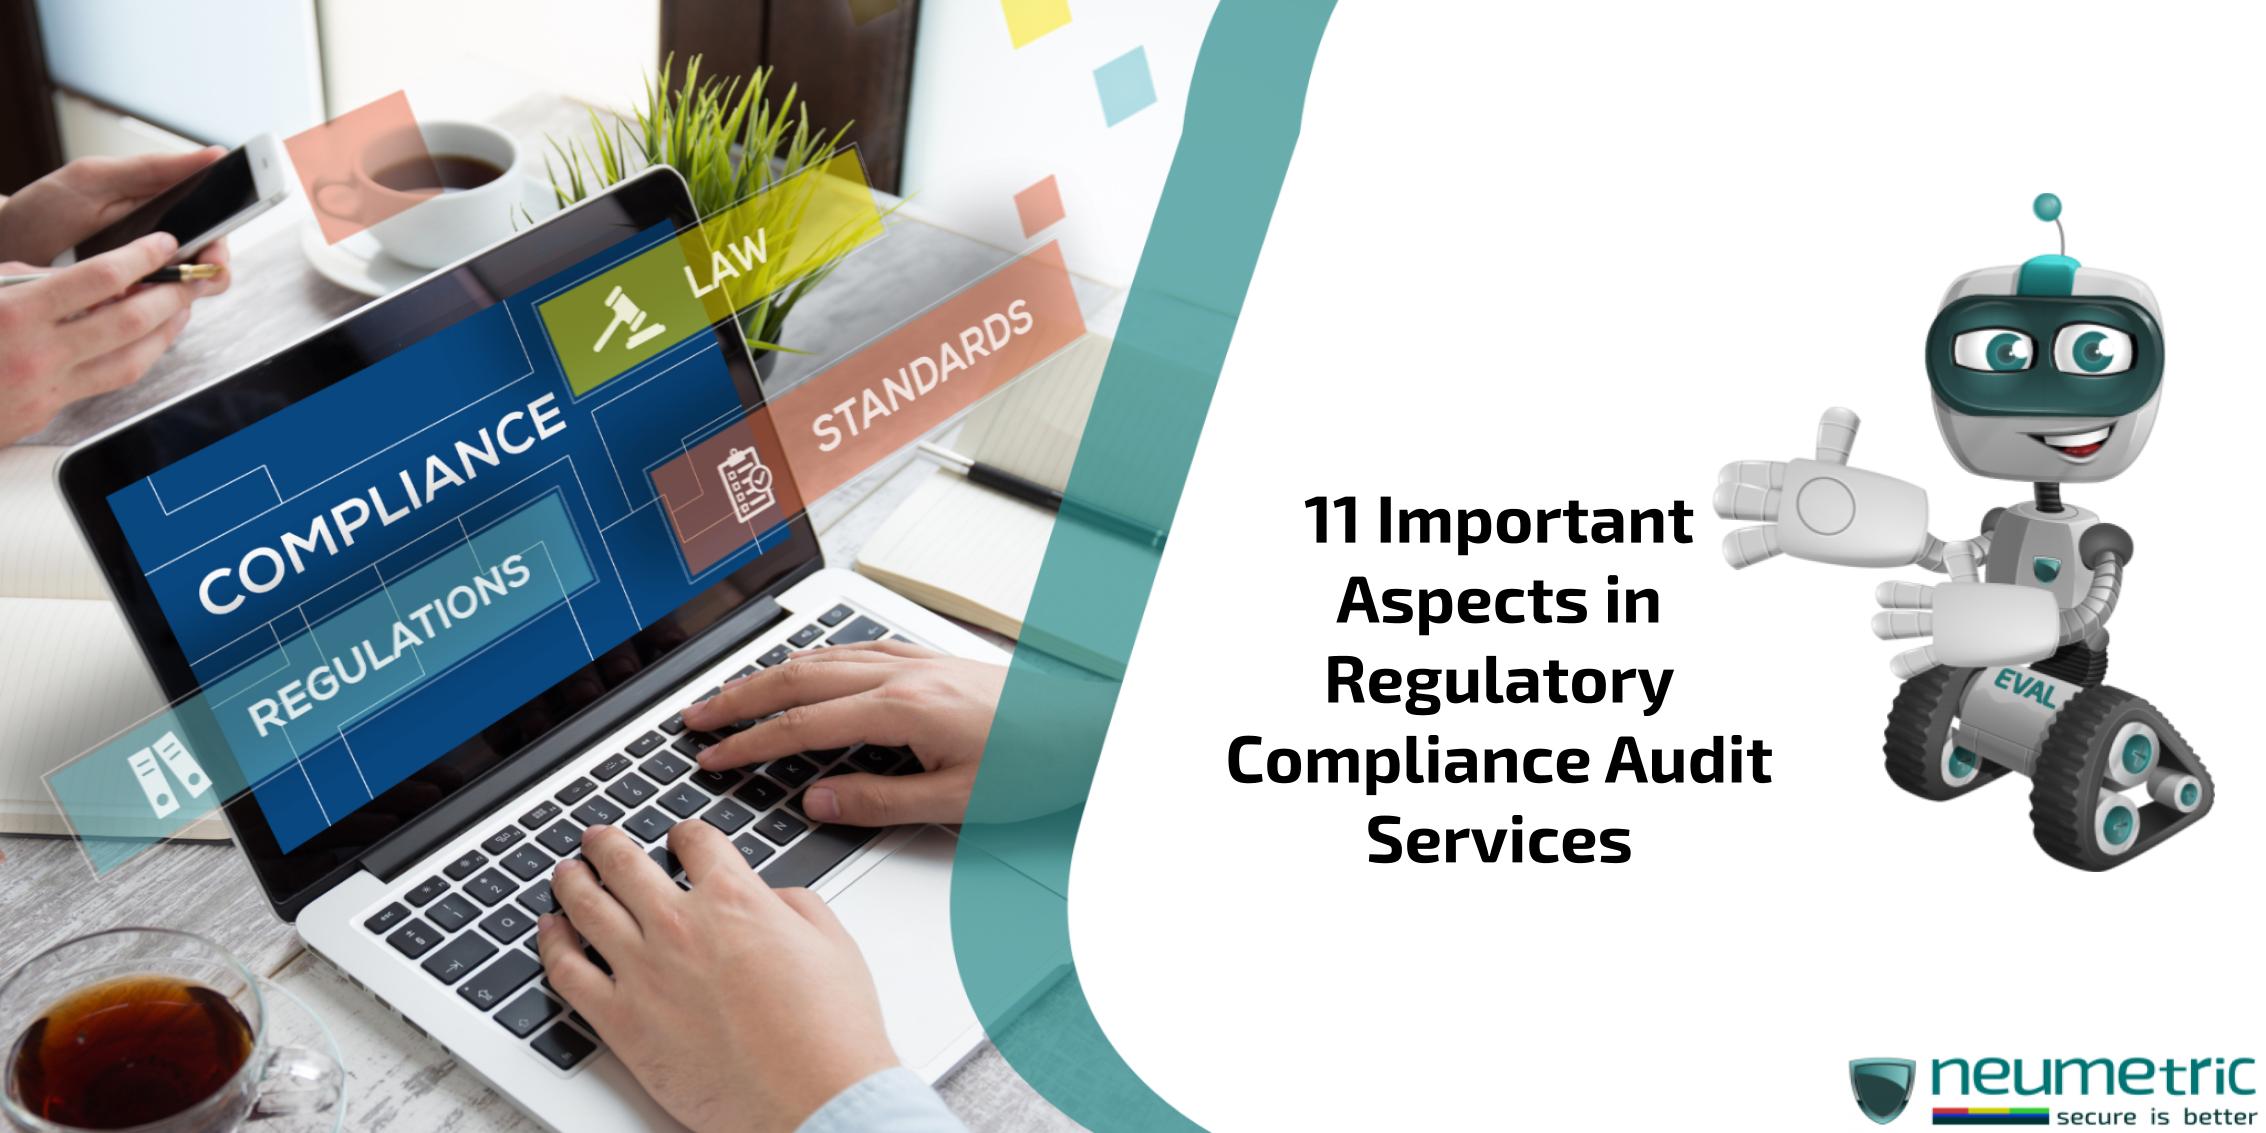 Regulatory compliance audit services